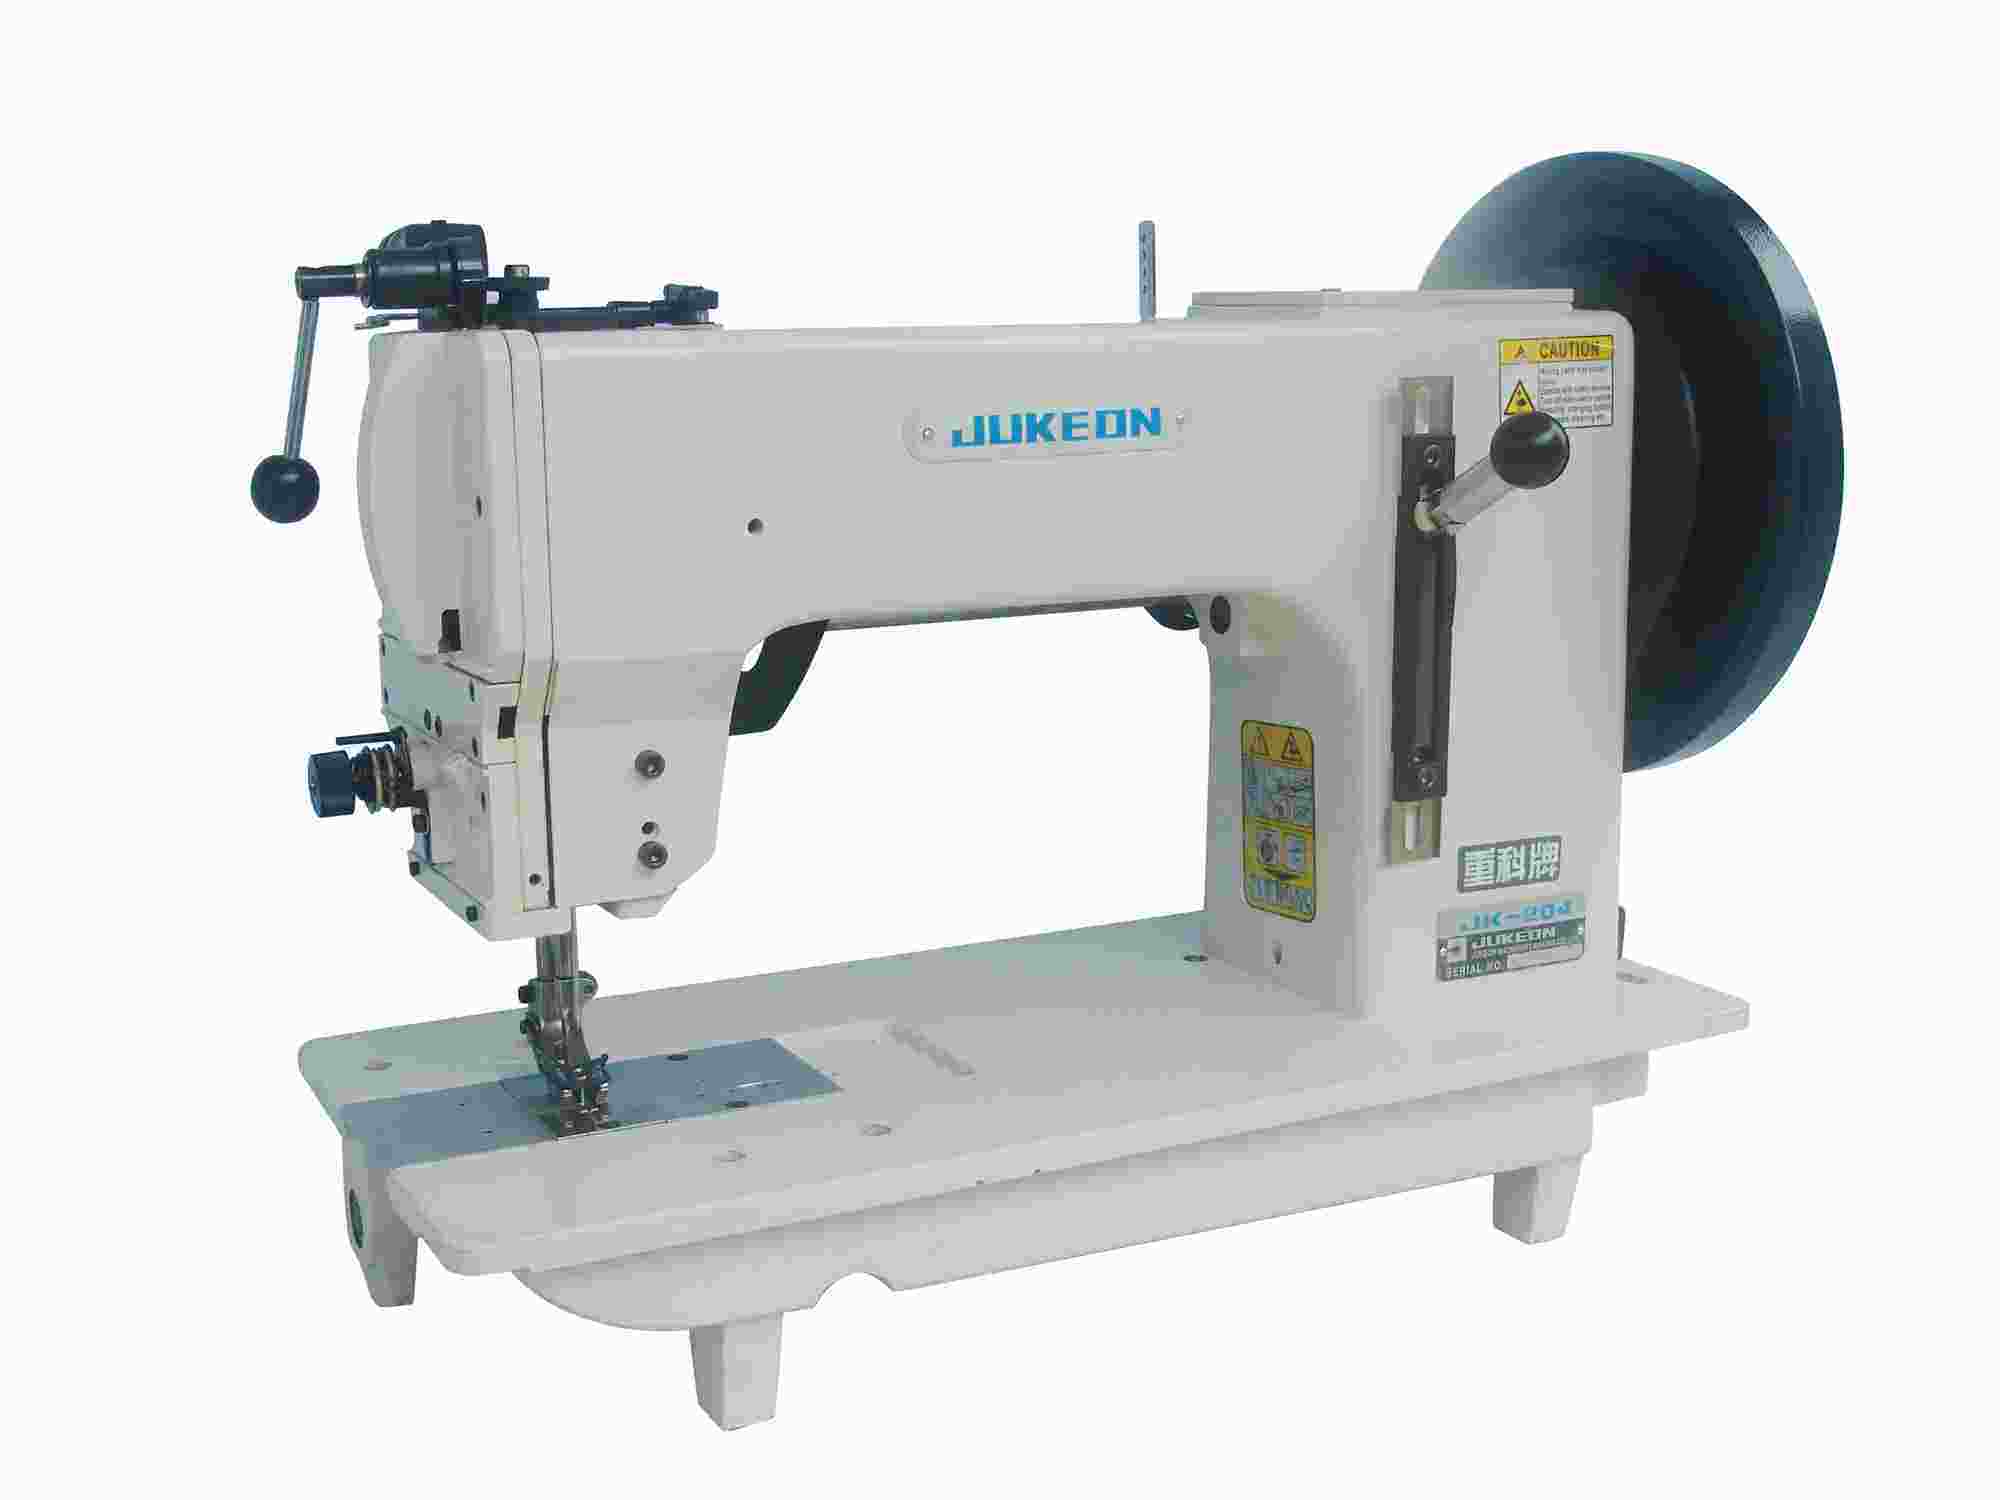 Single Needle Unison Feed Extra Heavy Duty Lockstitch Sewing Machine (JK-204)